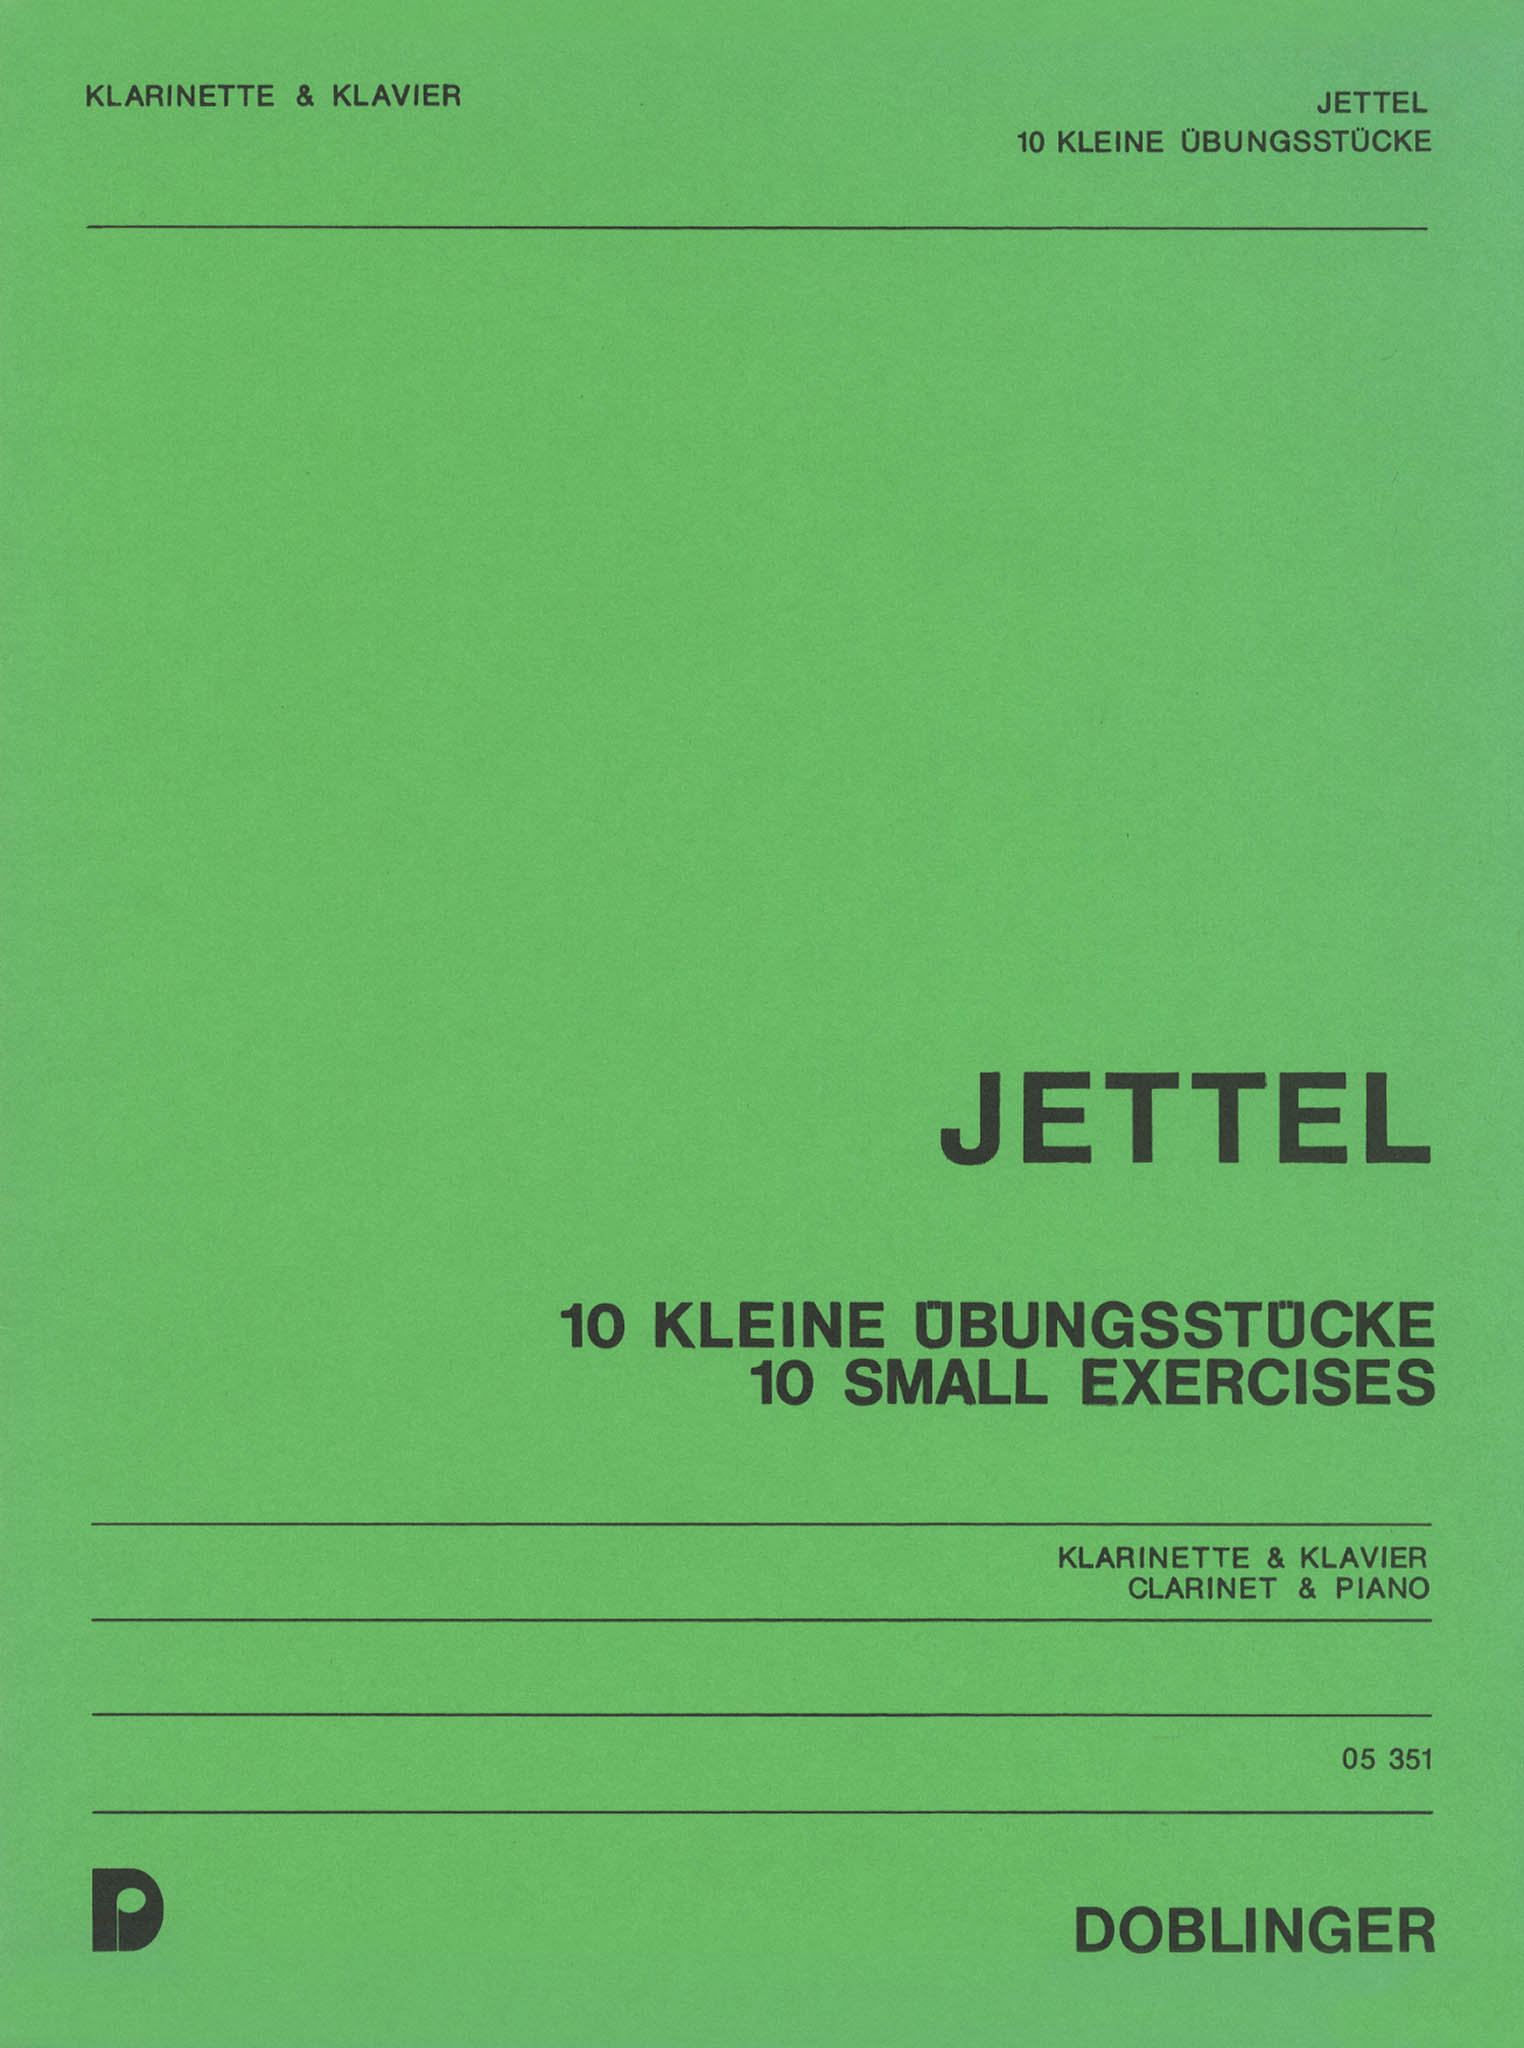 Jettel 10 Klein e Ubunsstuck clarinet piano Cover